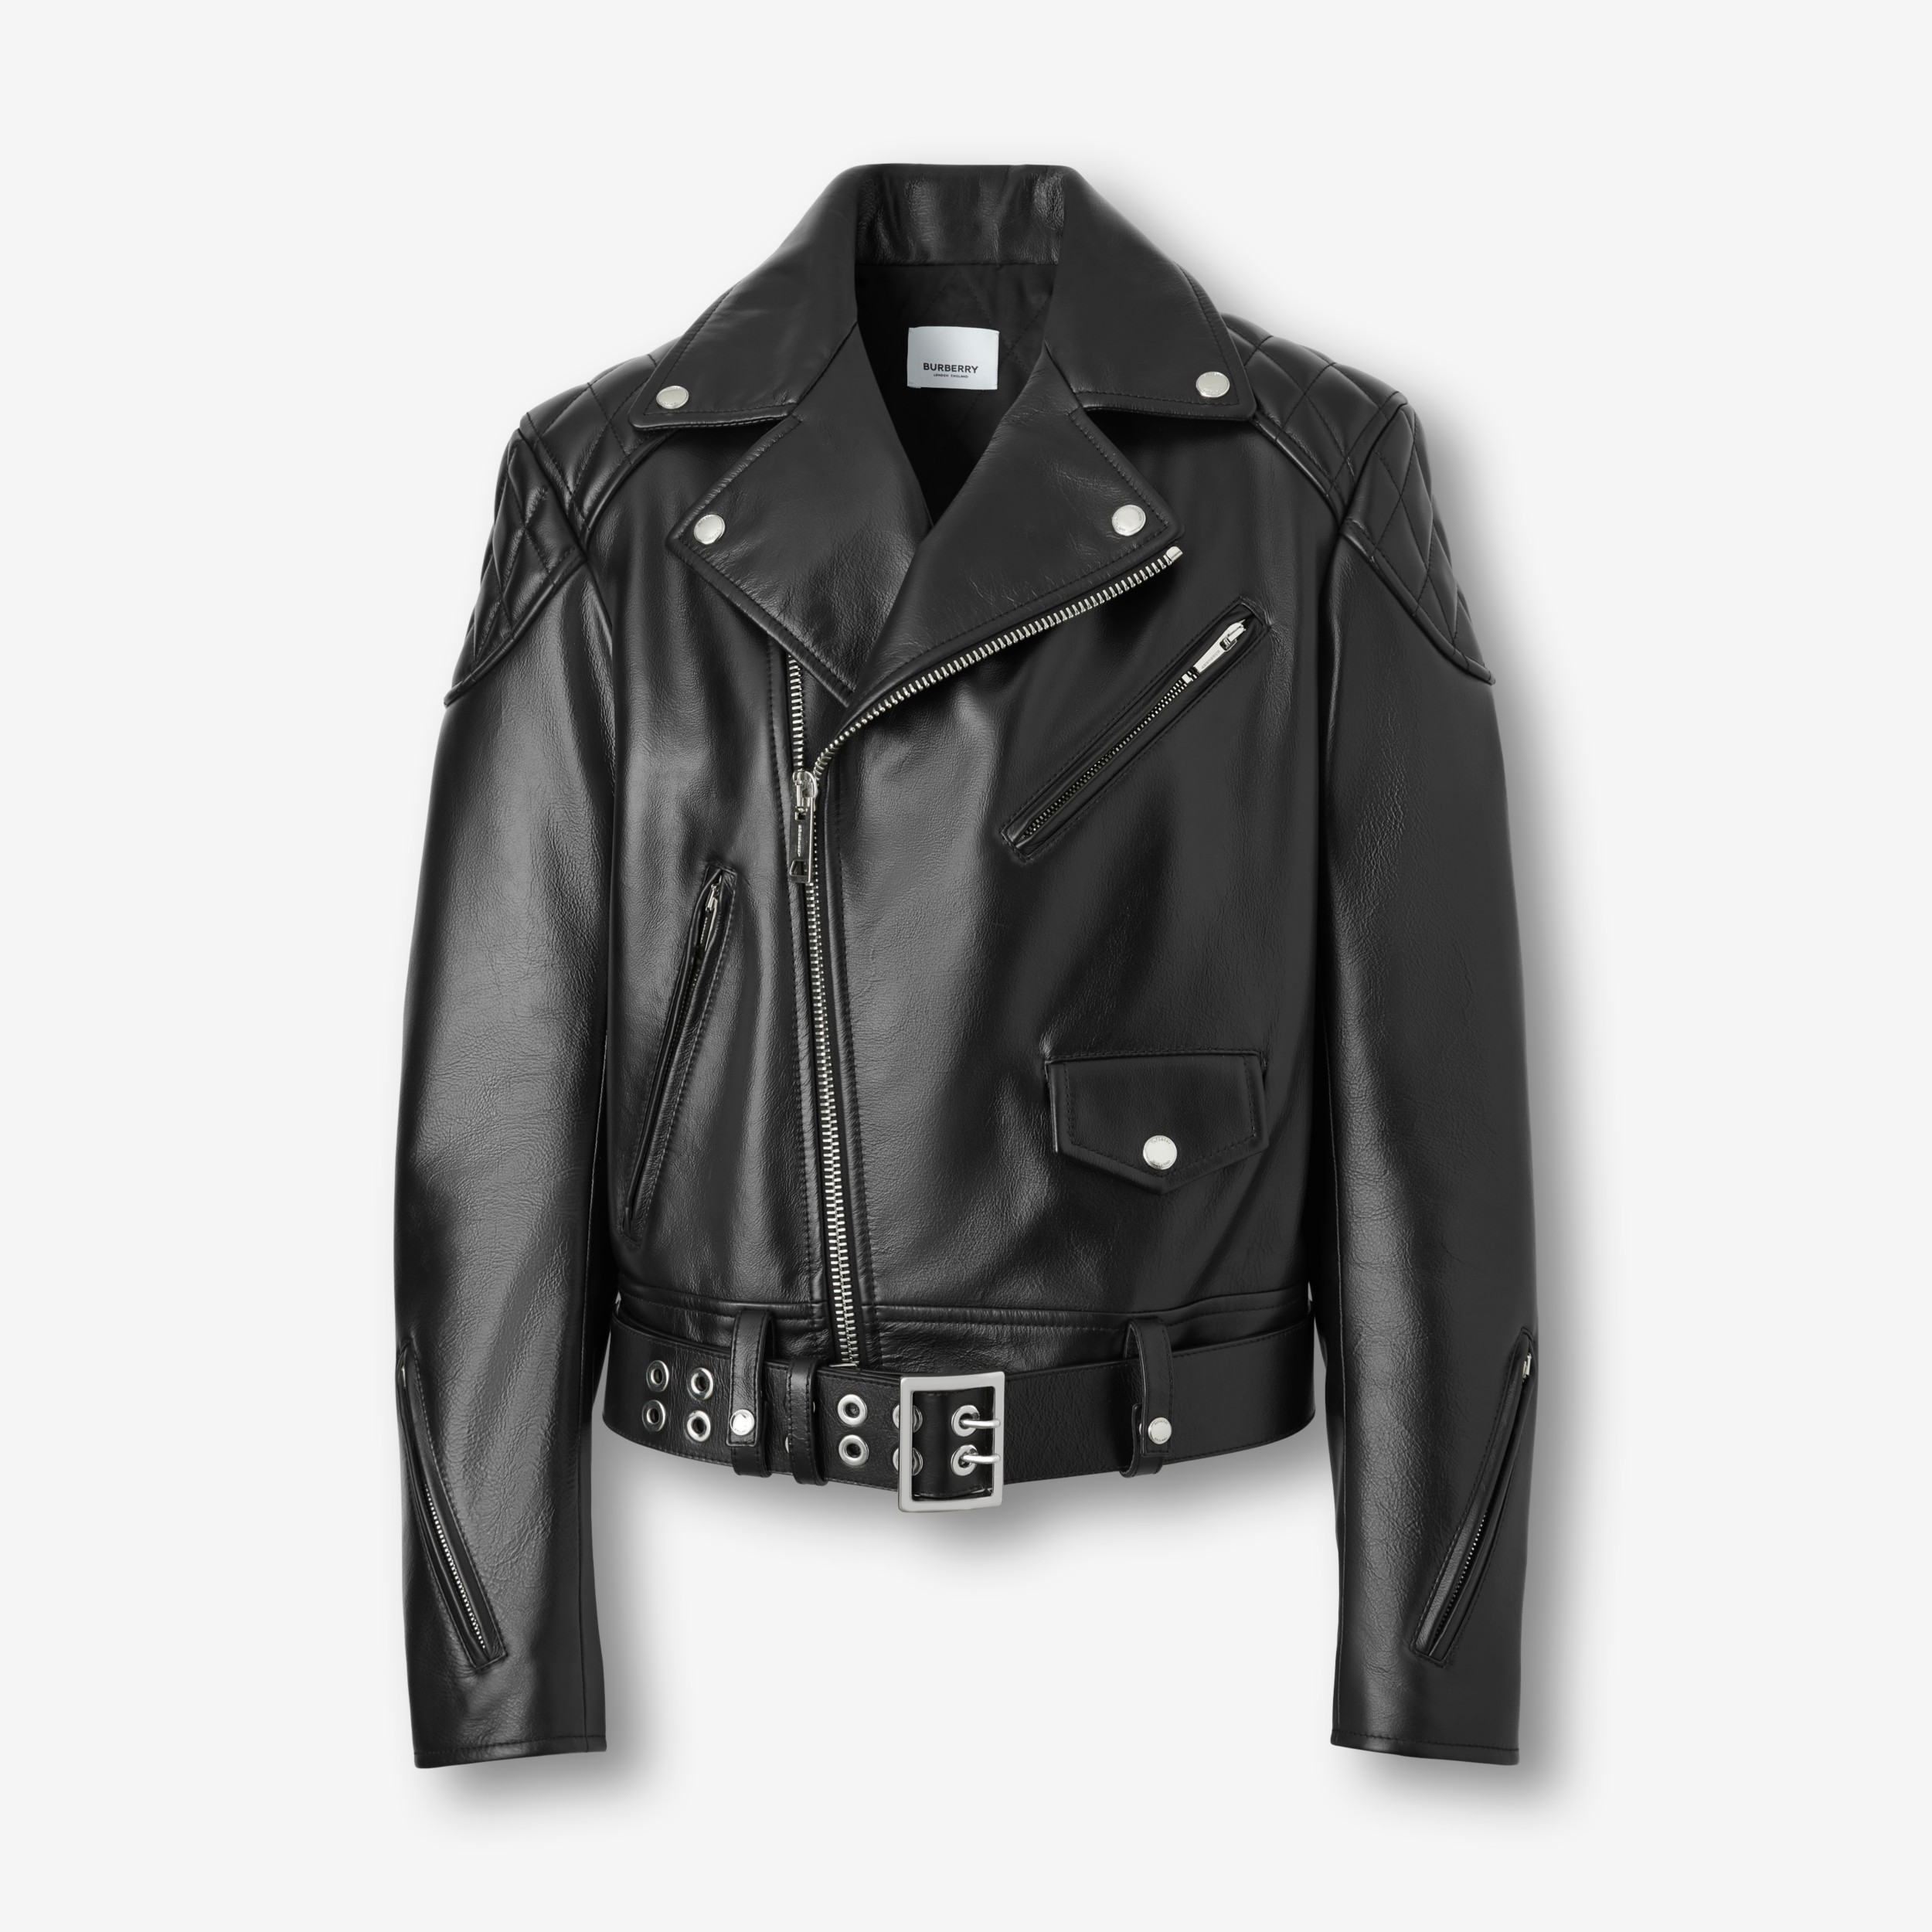 Actualizar 72+ imagen burberry leather motorcycle jacket